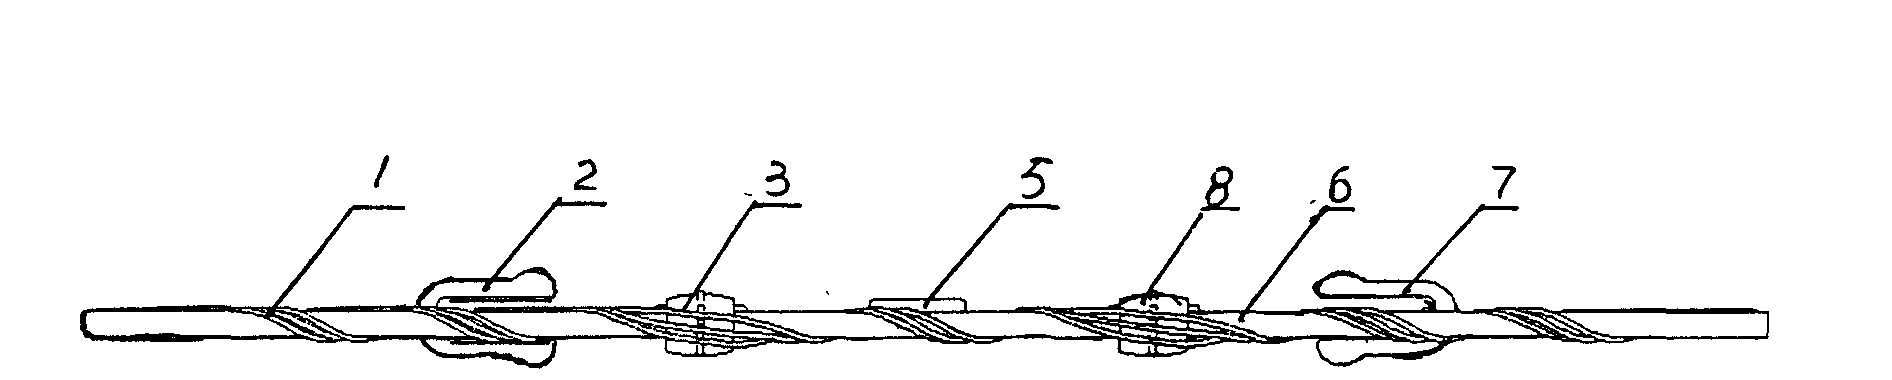 Long-span two-body damper